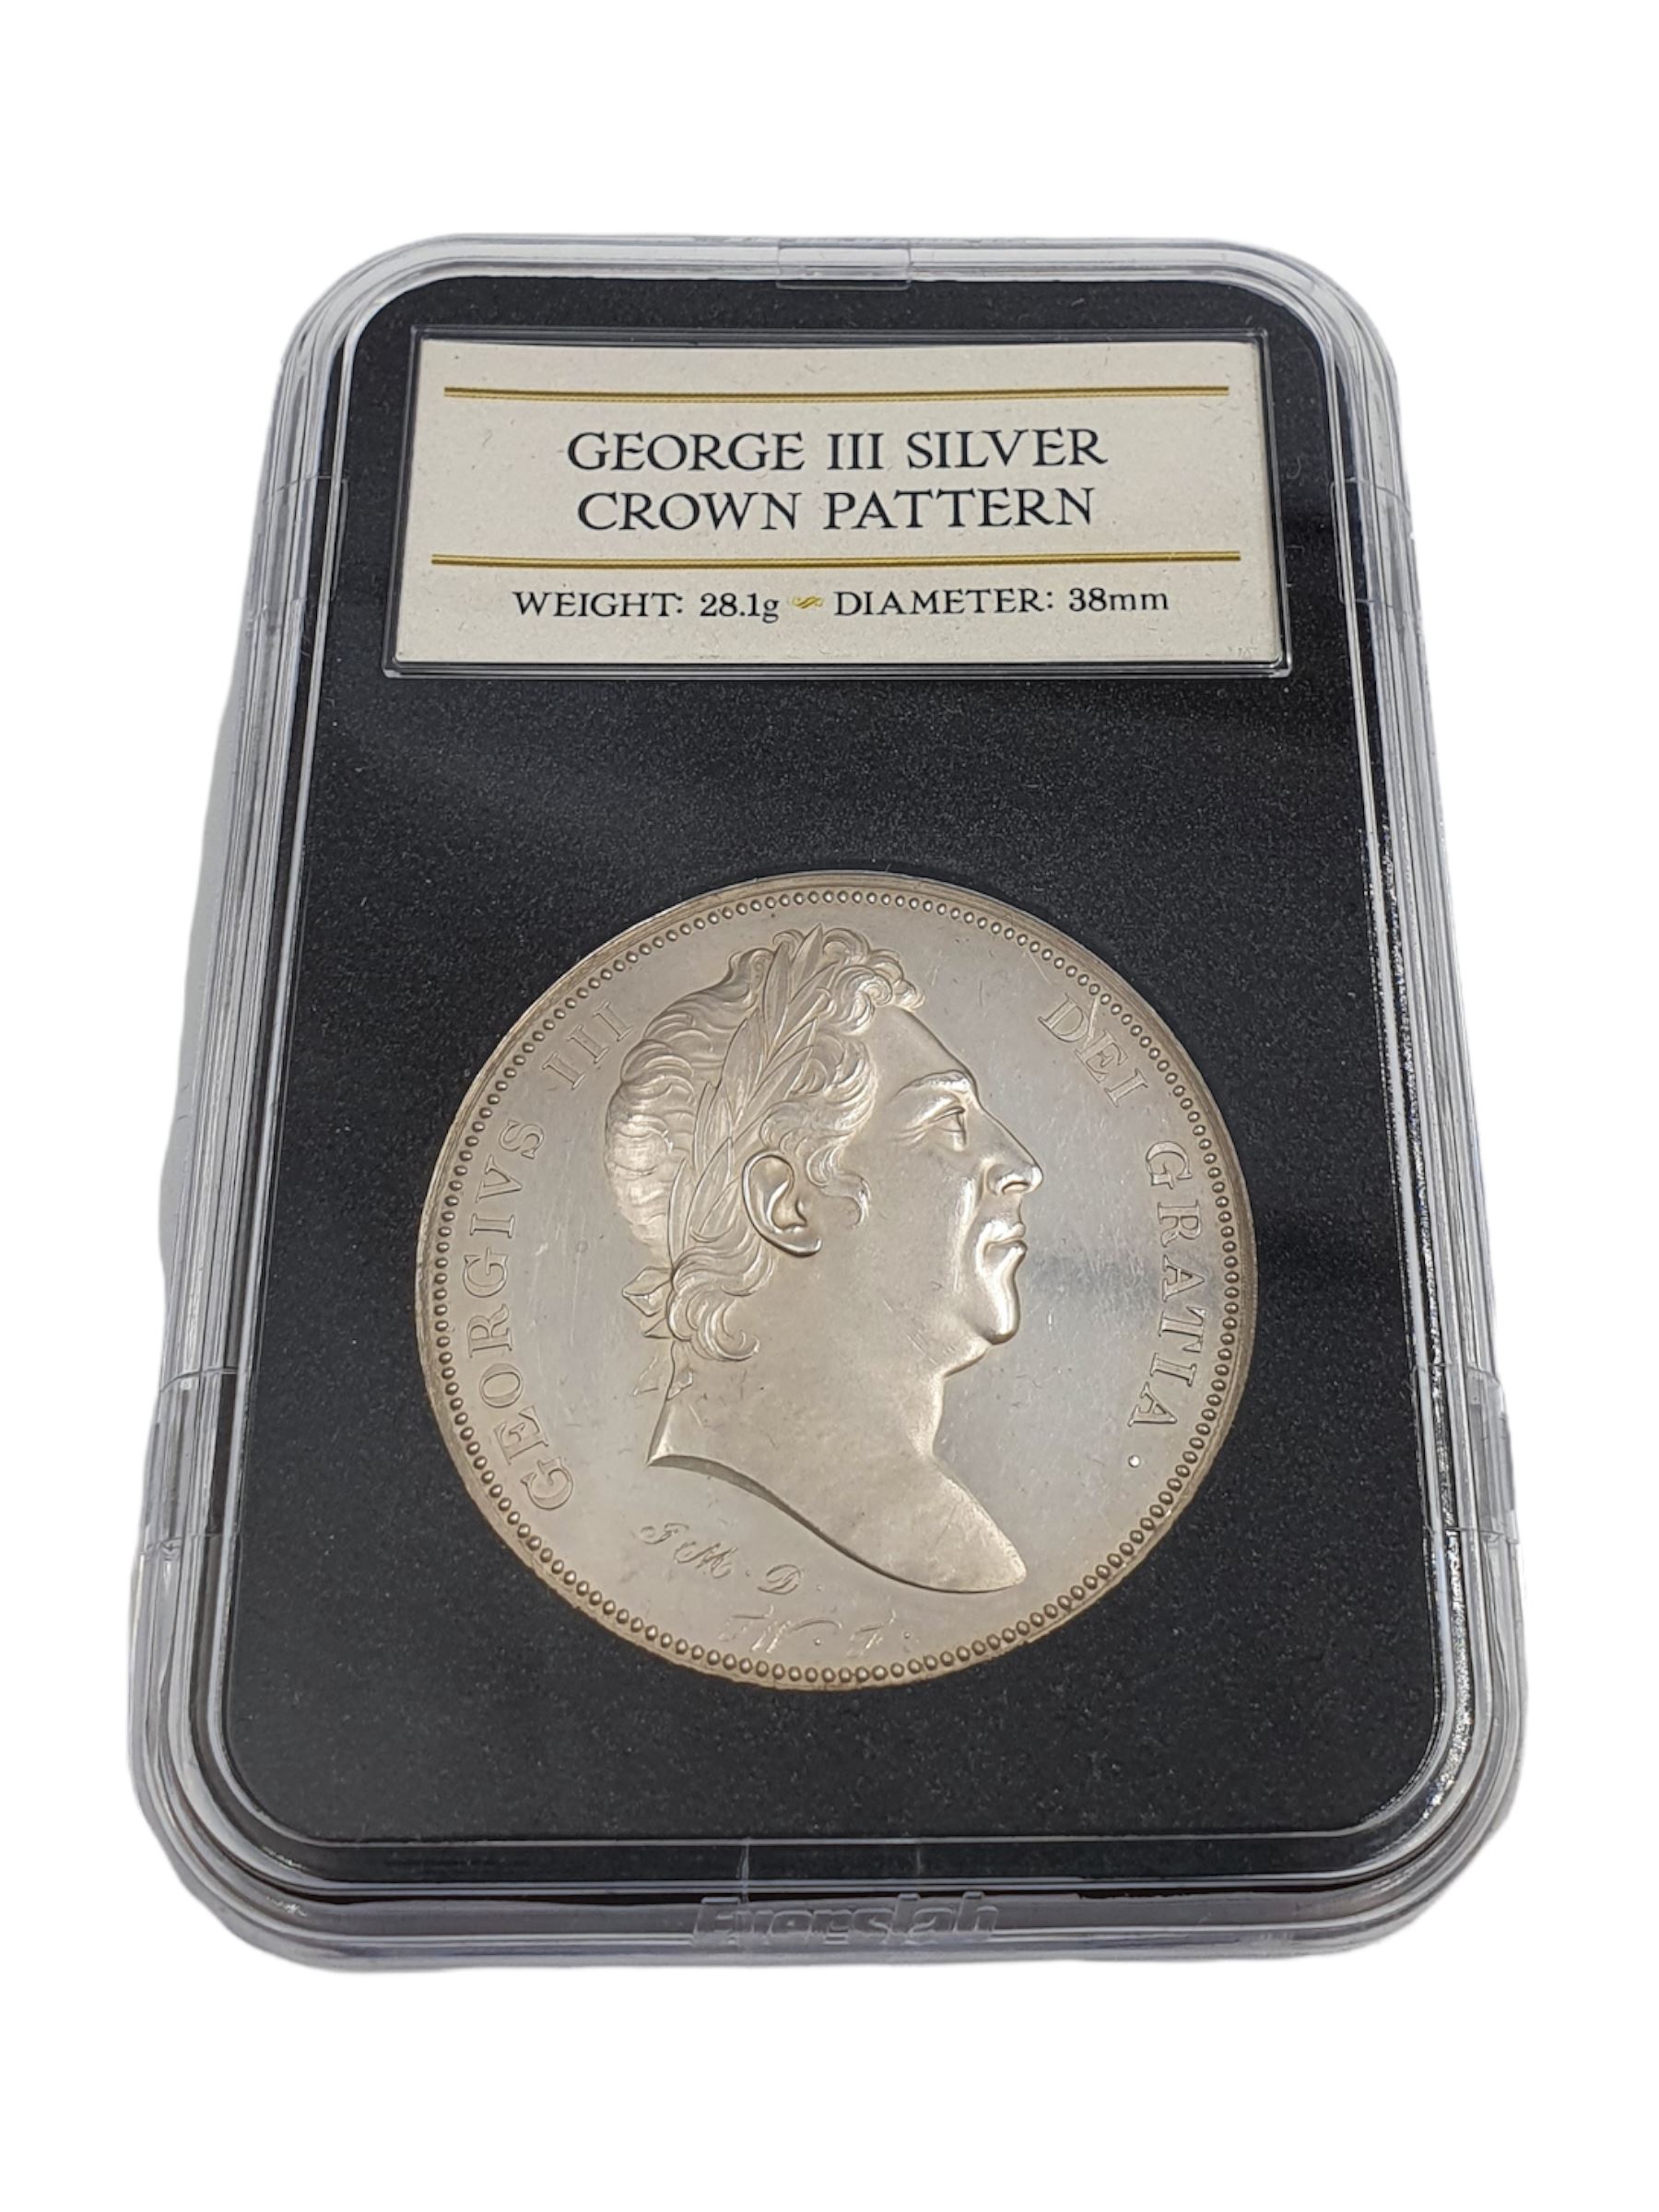 George III silver crown pattern piece